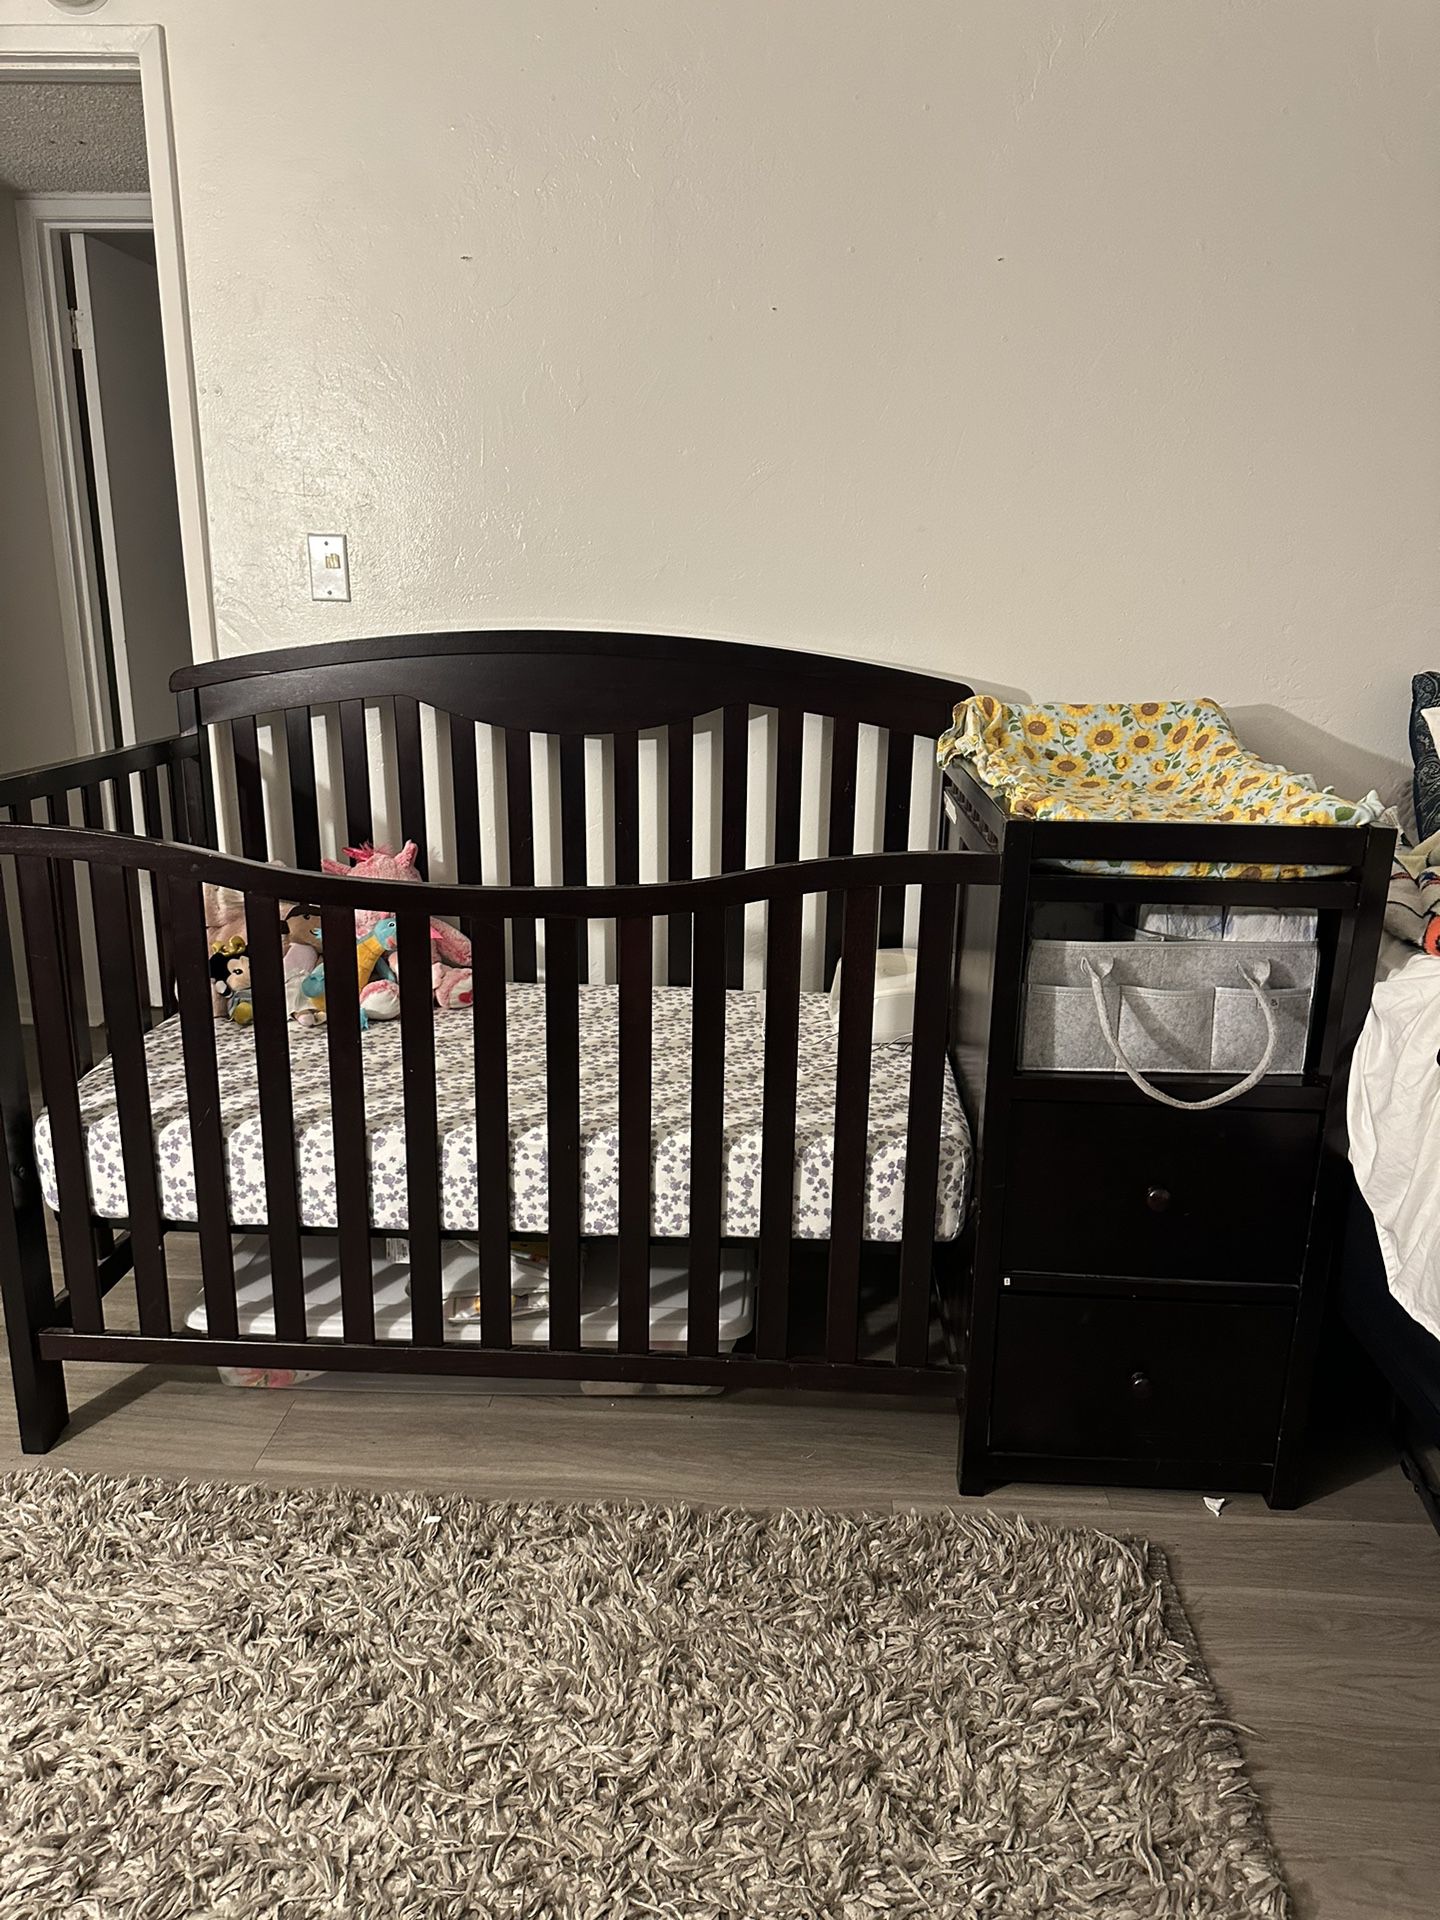 Baby Crib + Changing Table